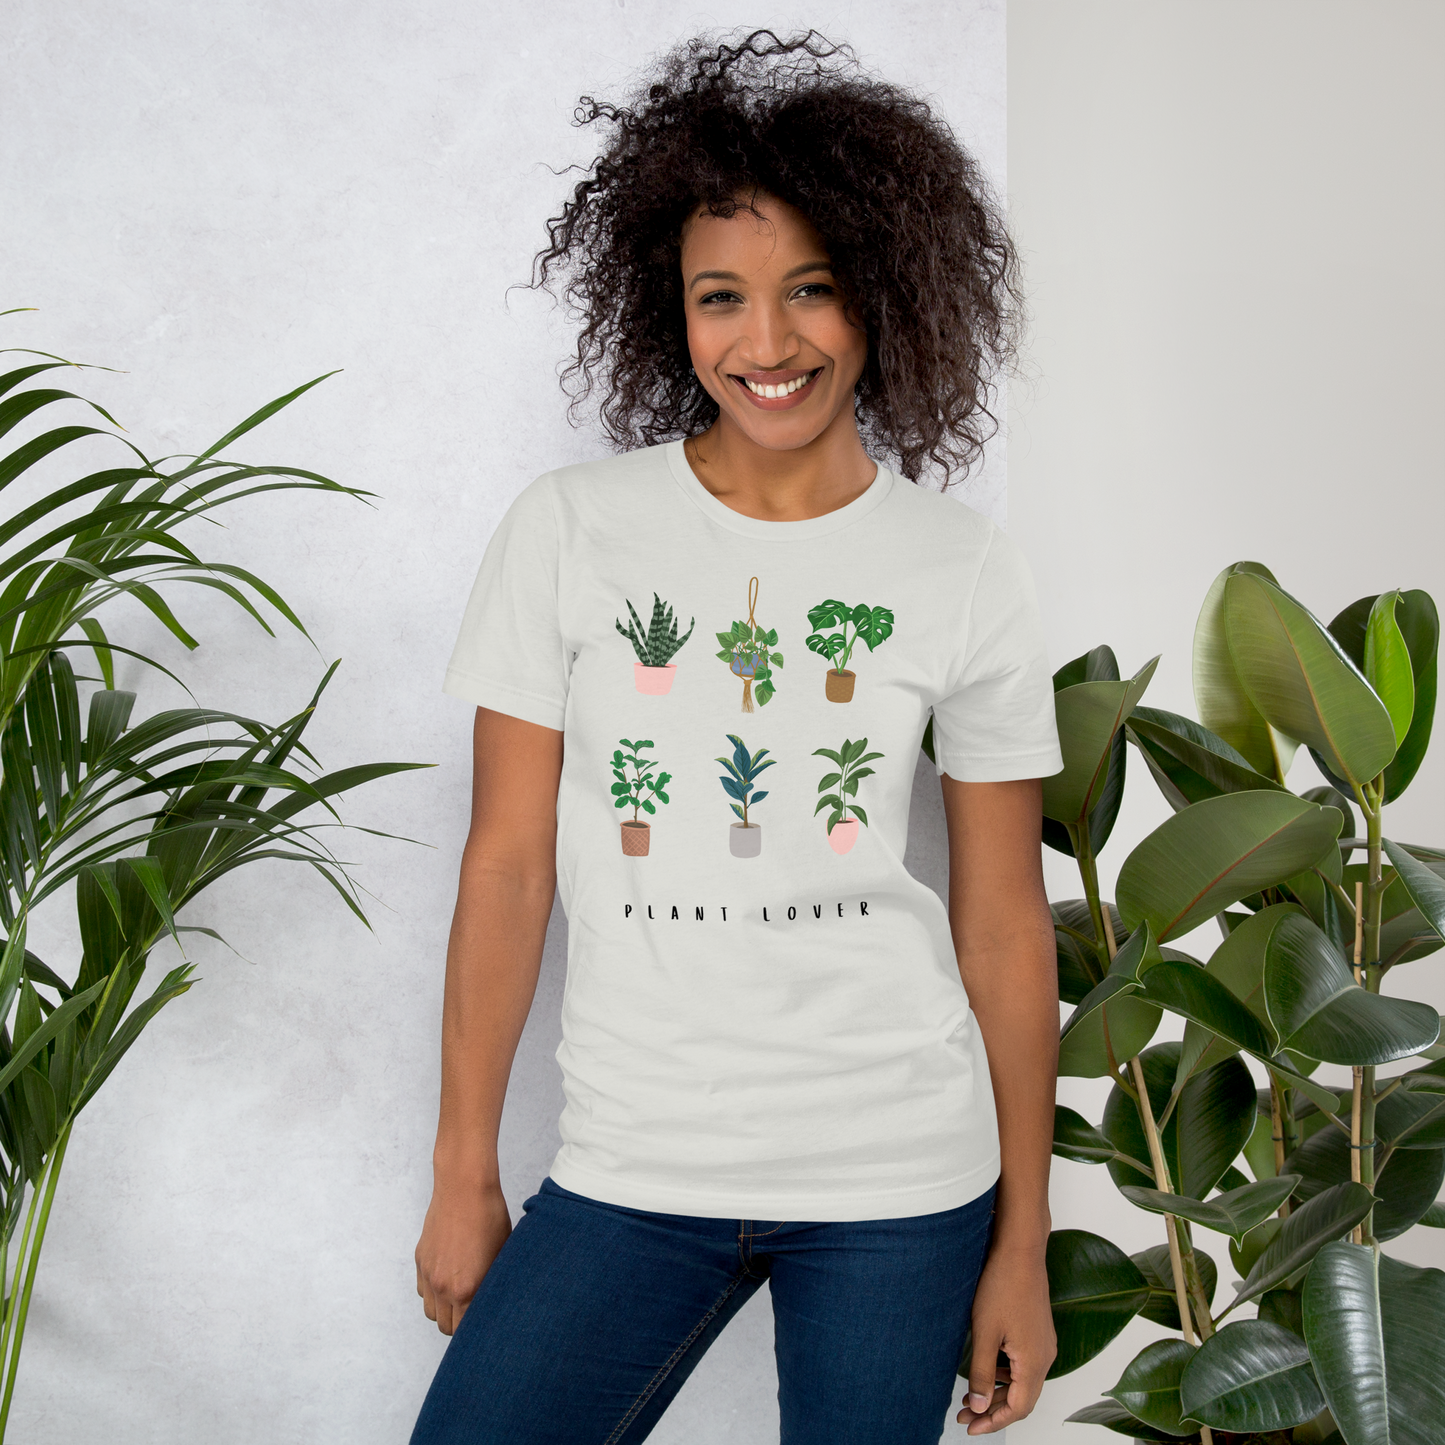 BM TEE A Plant Lover Graphic Tee Shirt